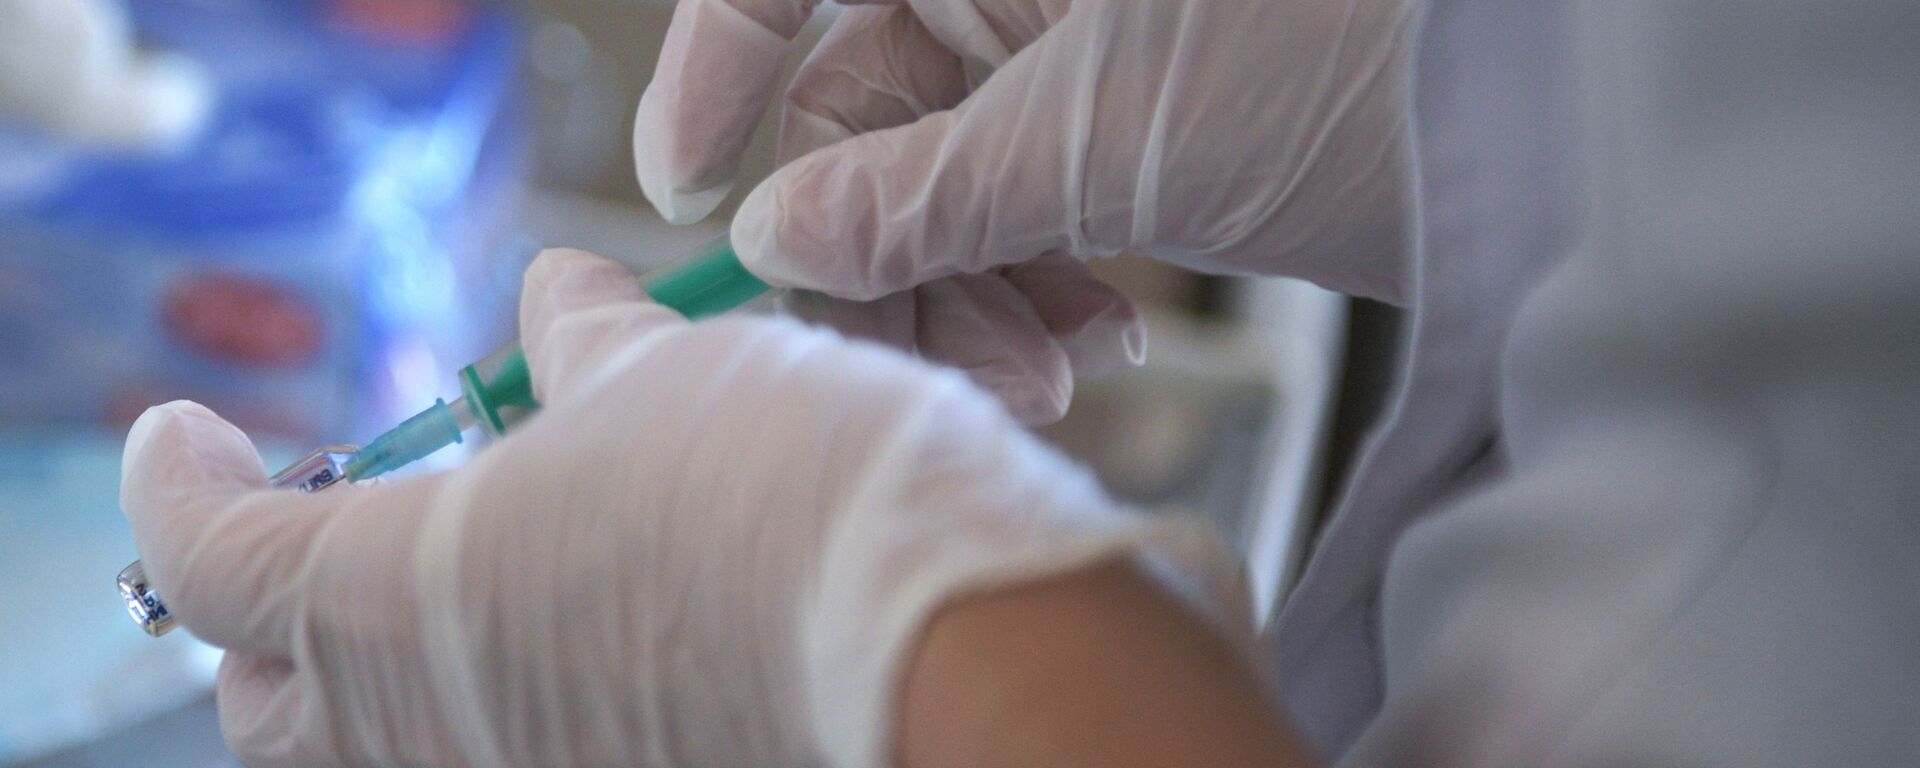 Медицинский работник производит вакцинацию от кори - Sputnik Արմենիա, 1920, 18.06.2021